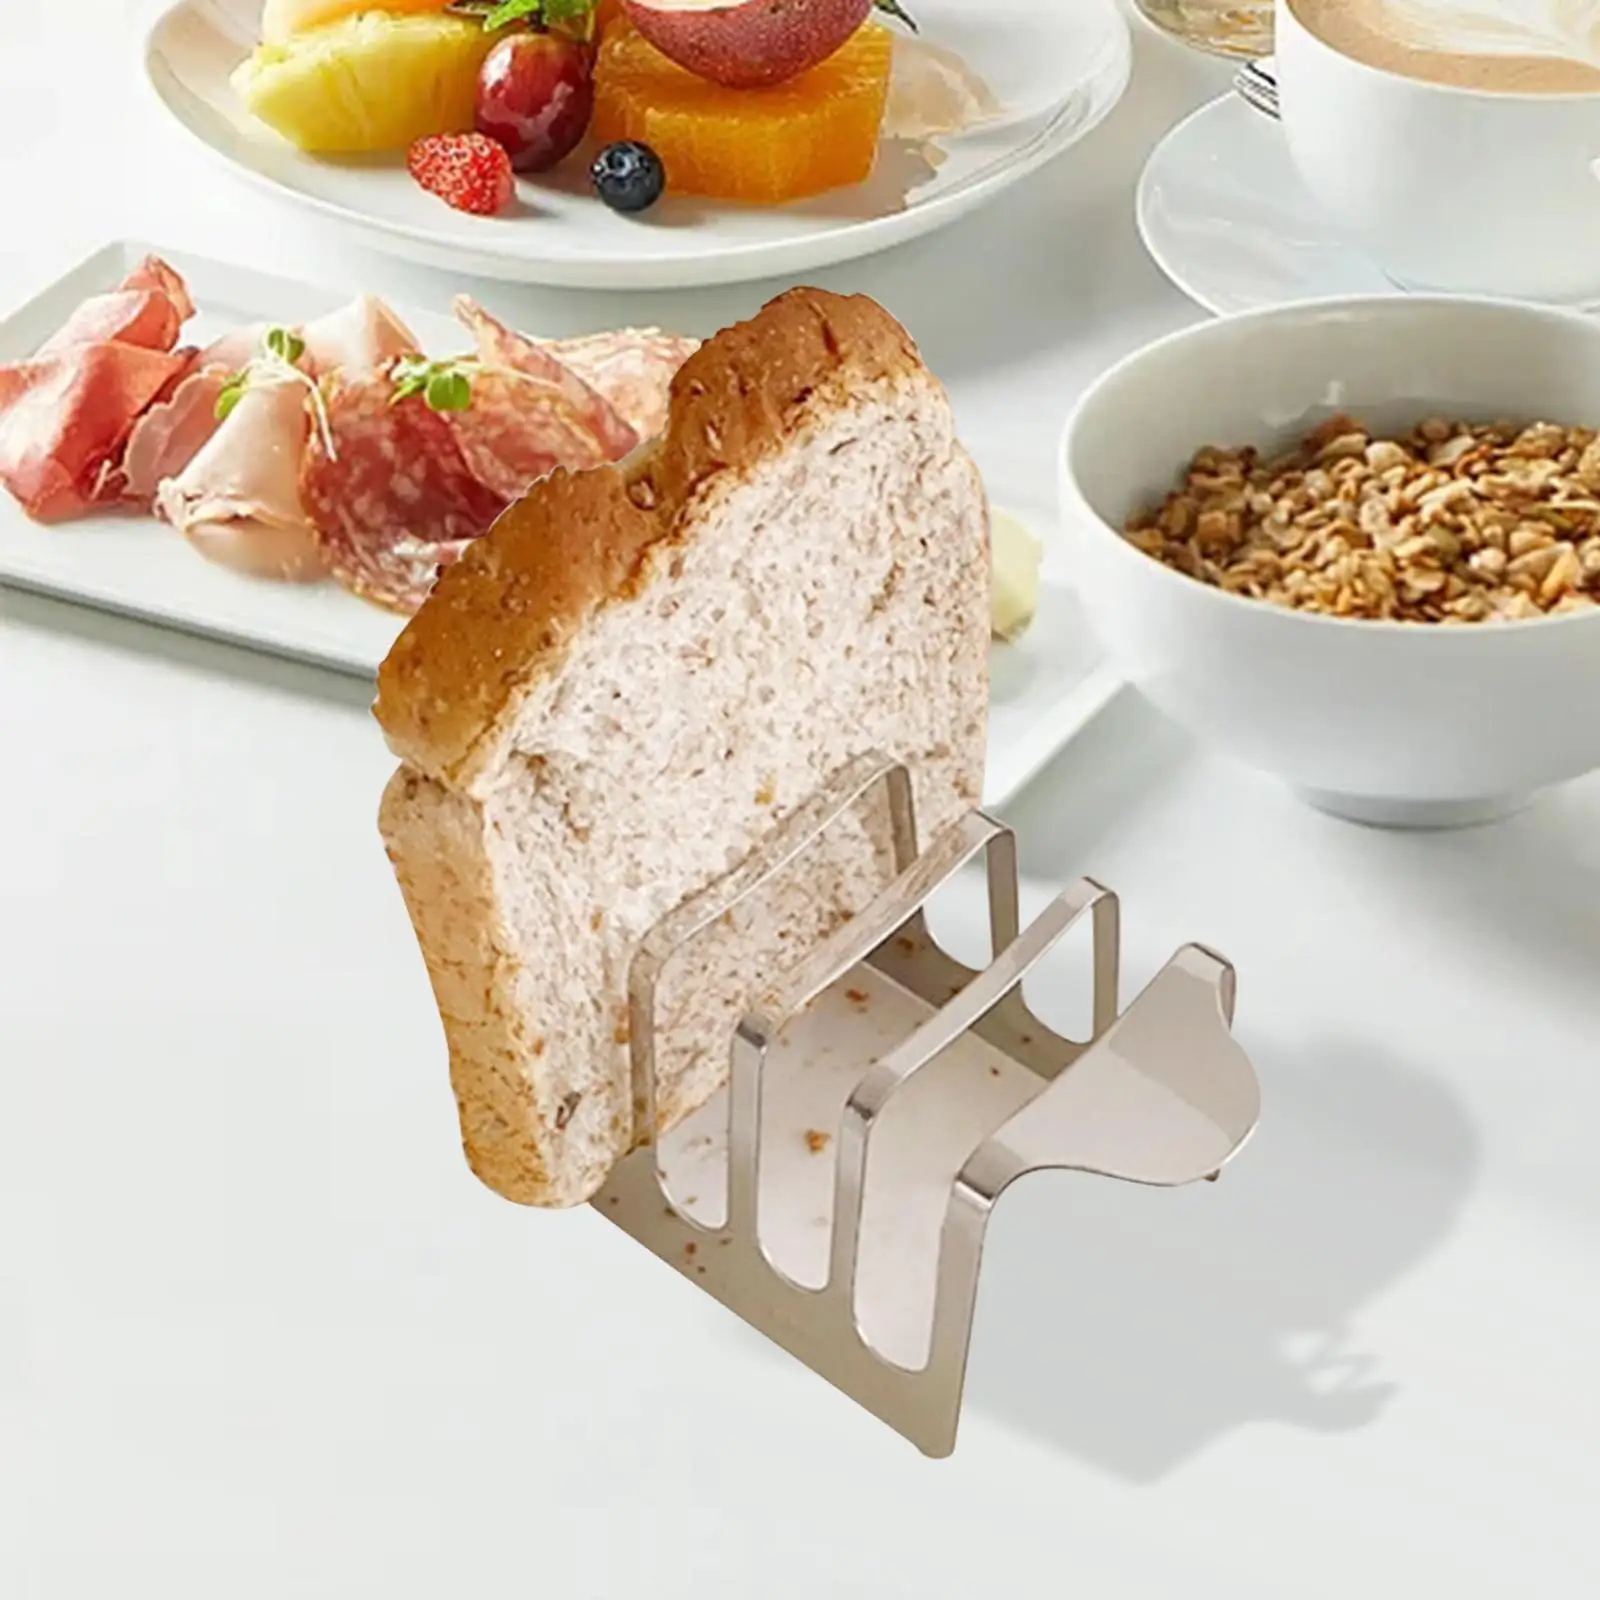 Toast Rack Air Fryer Accessories 4 Slice Slots Stainless Steel Bread Loaf Slice Holder for Oven Bakery Pancake Bread Baking